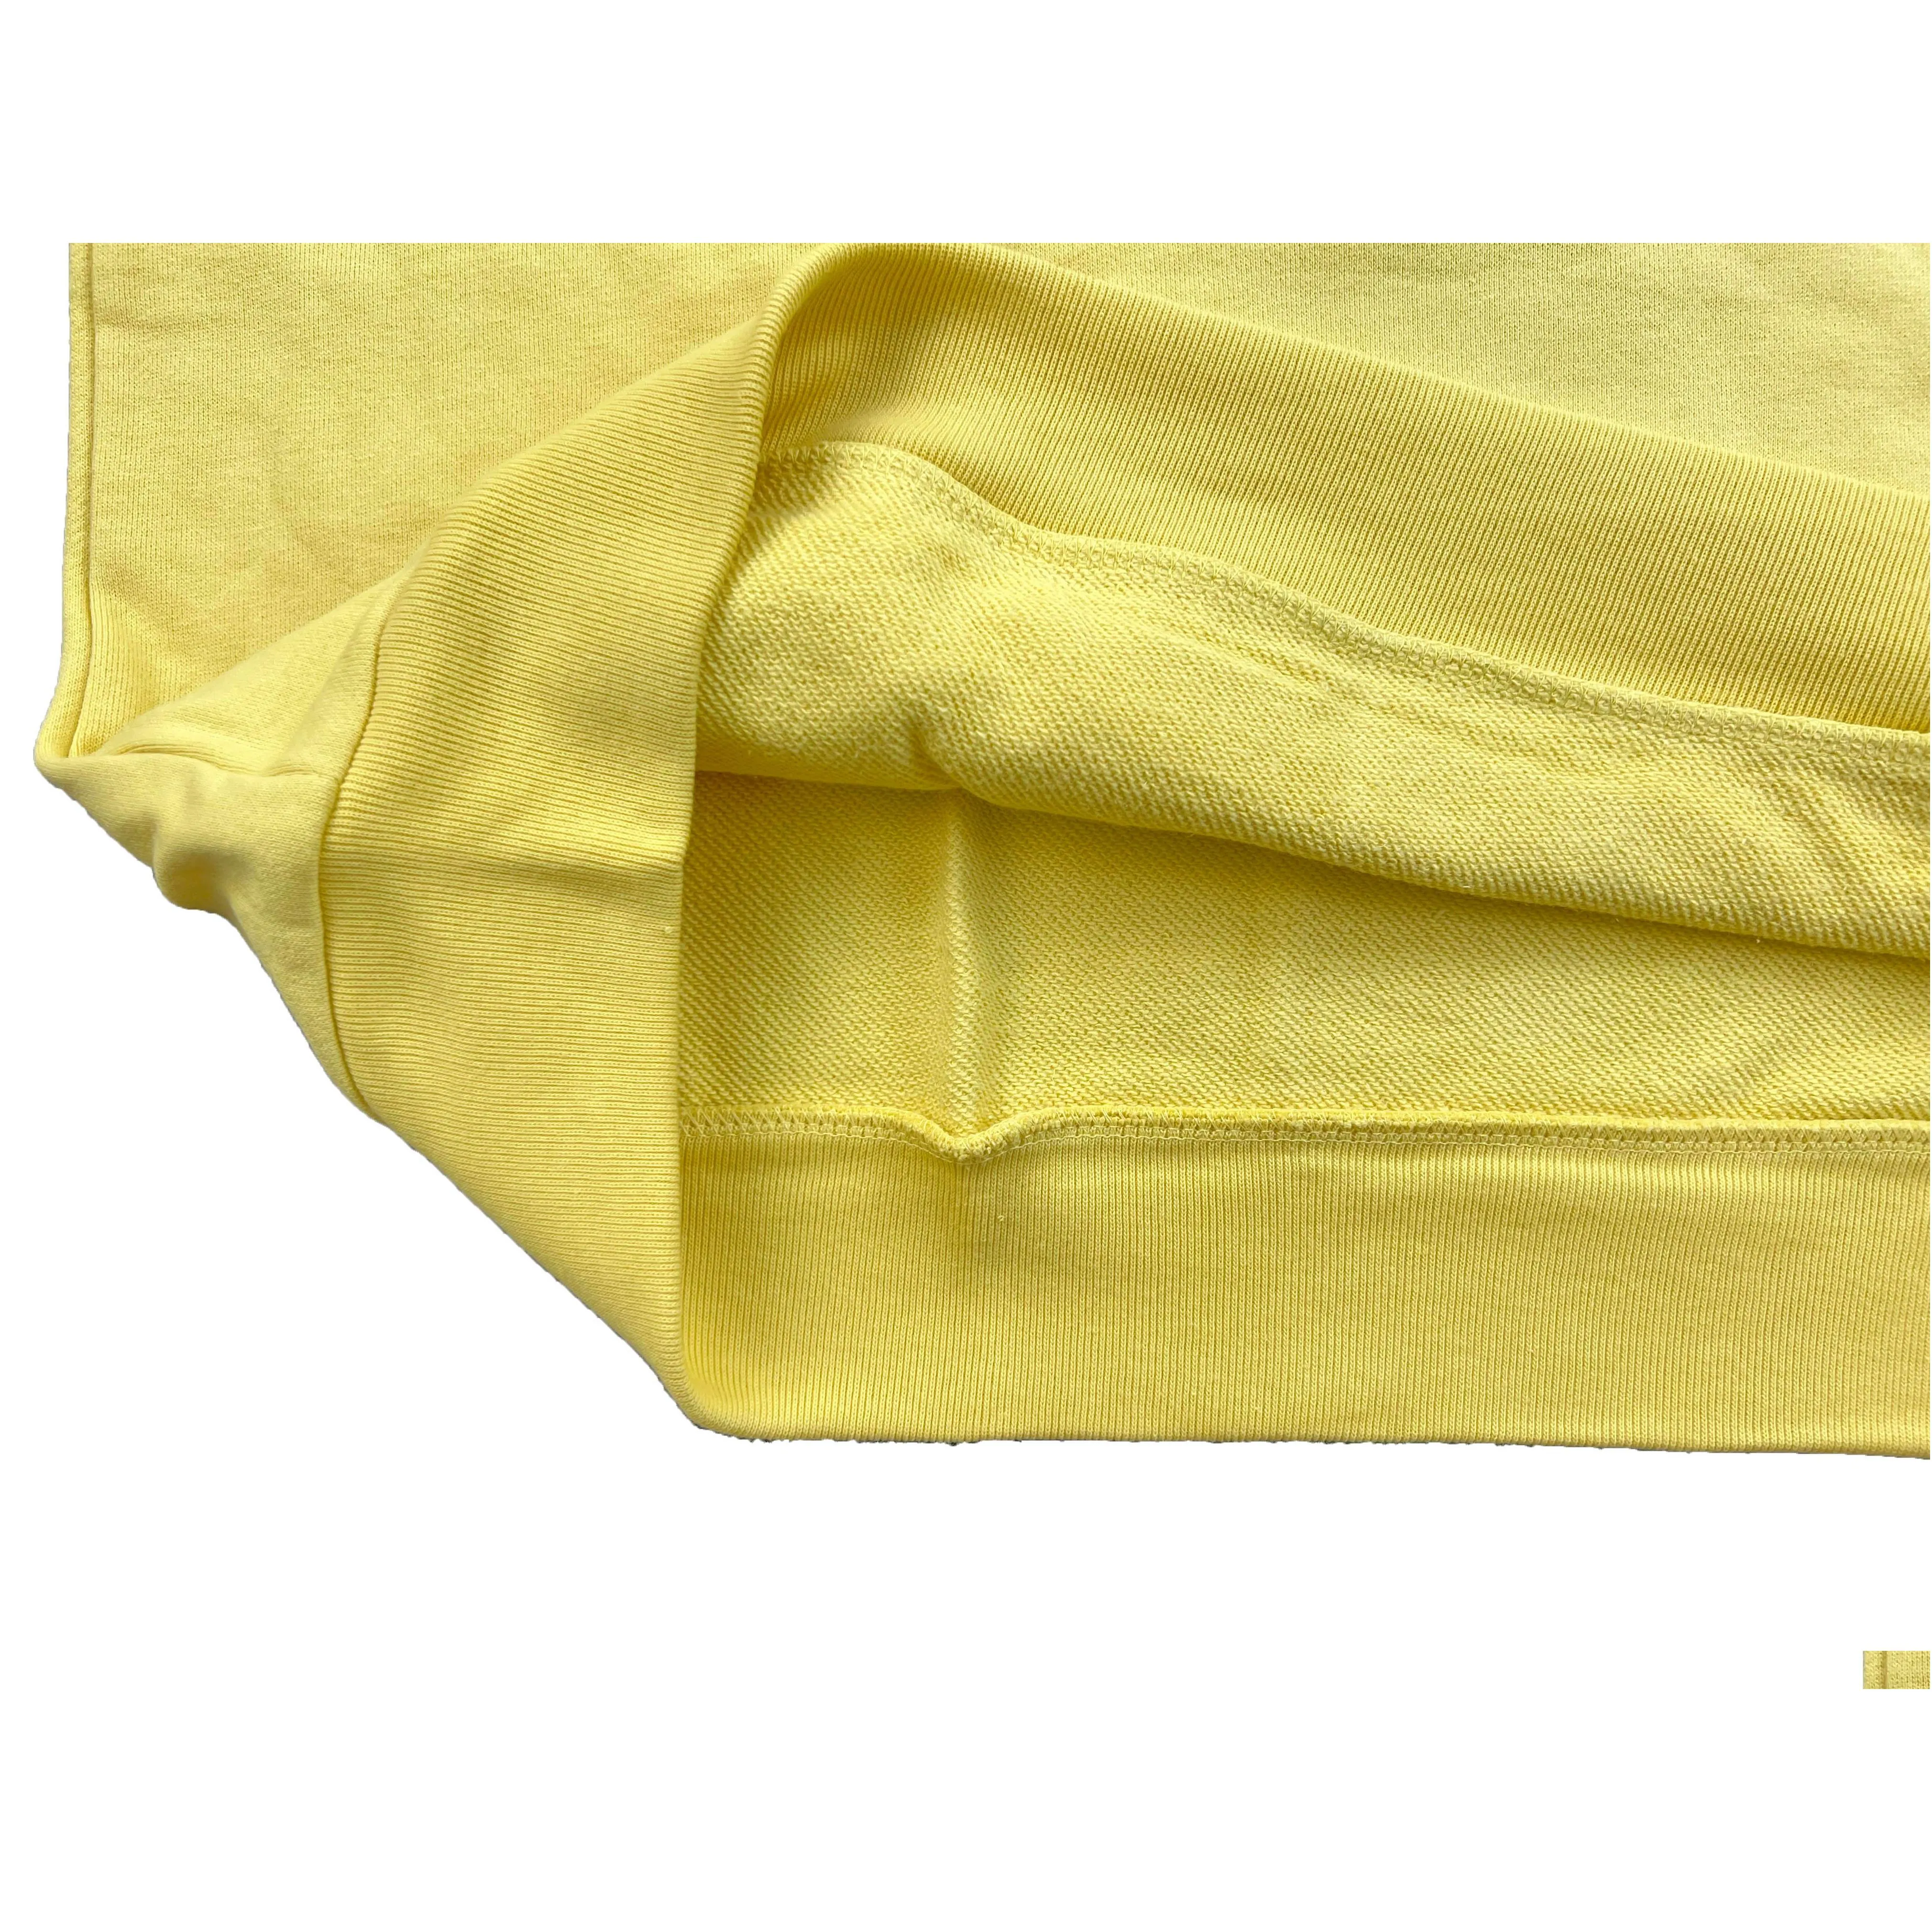 2022 yellow color hoodies sweatshirts men women 1 high quality vintage wash printed hoodie oversized long sleeve